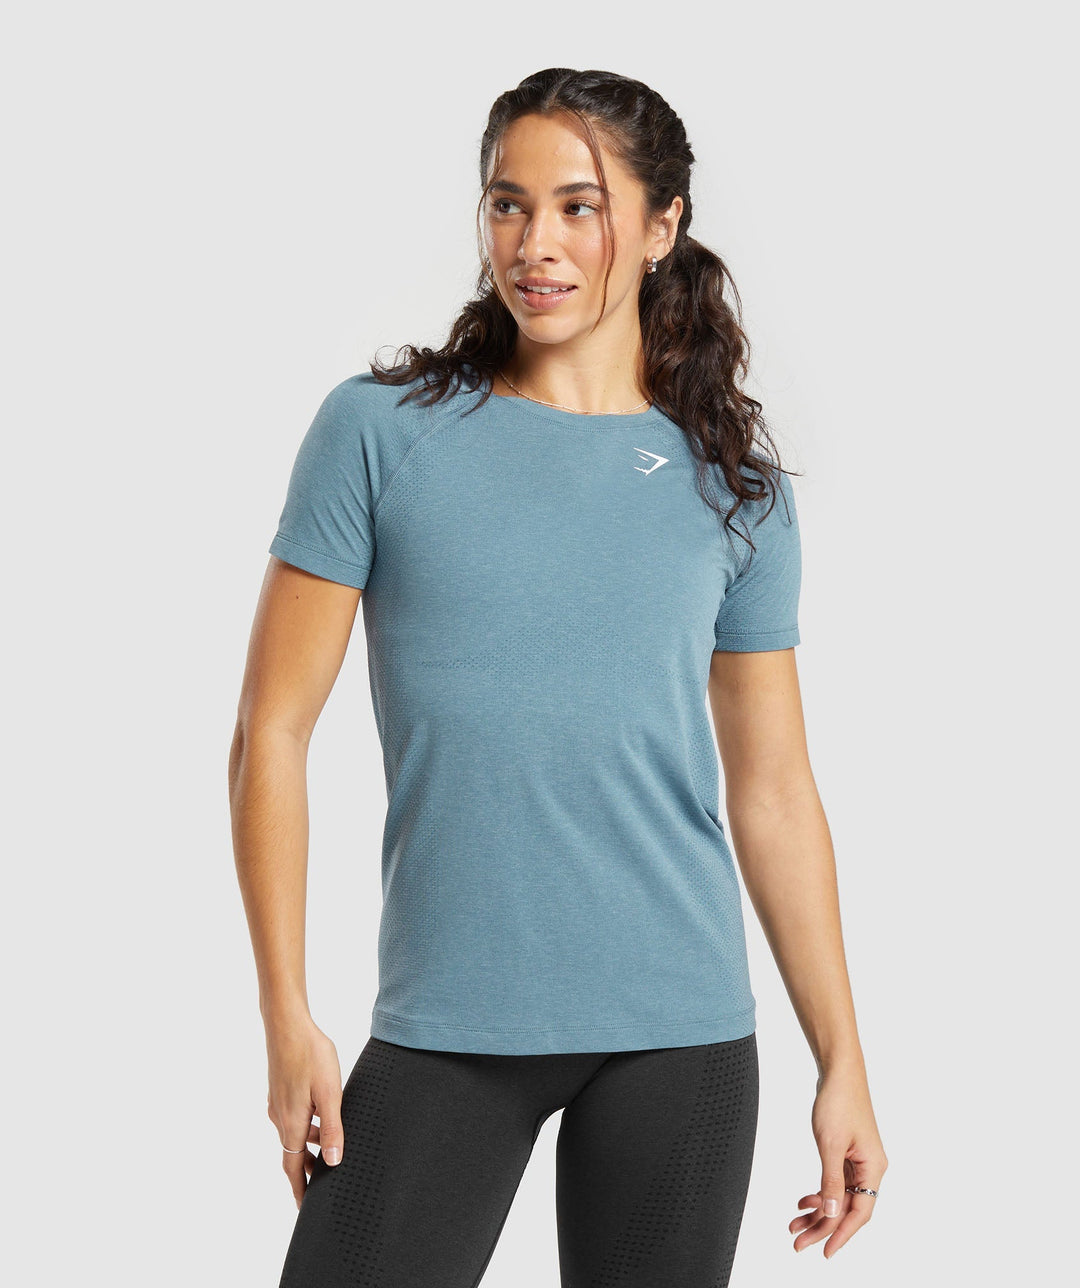 Gymshark Vital Seamless 2.0 Light T-Shirt - Stellar Blue Marl | Gymshark